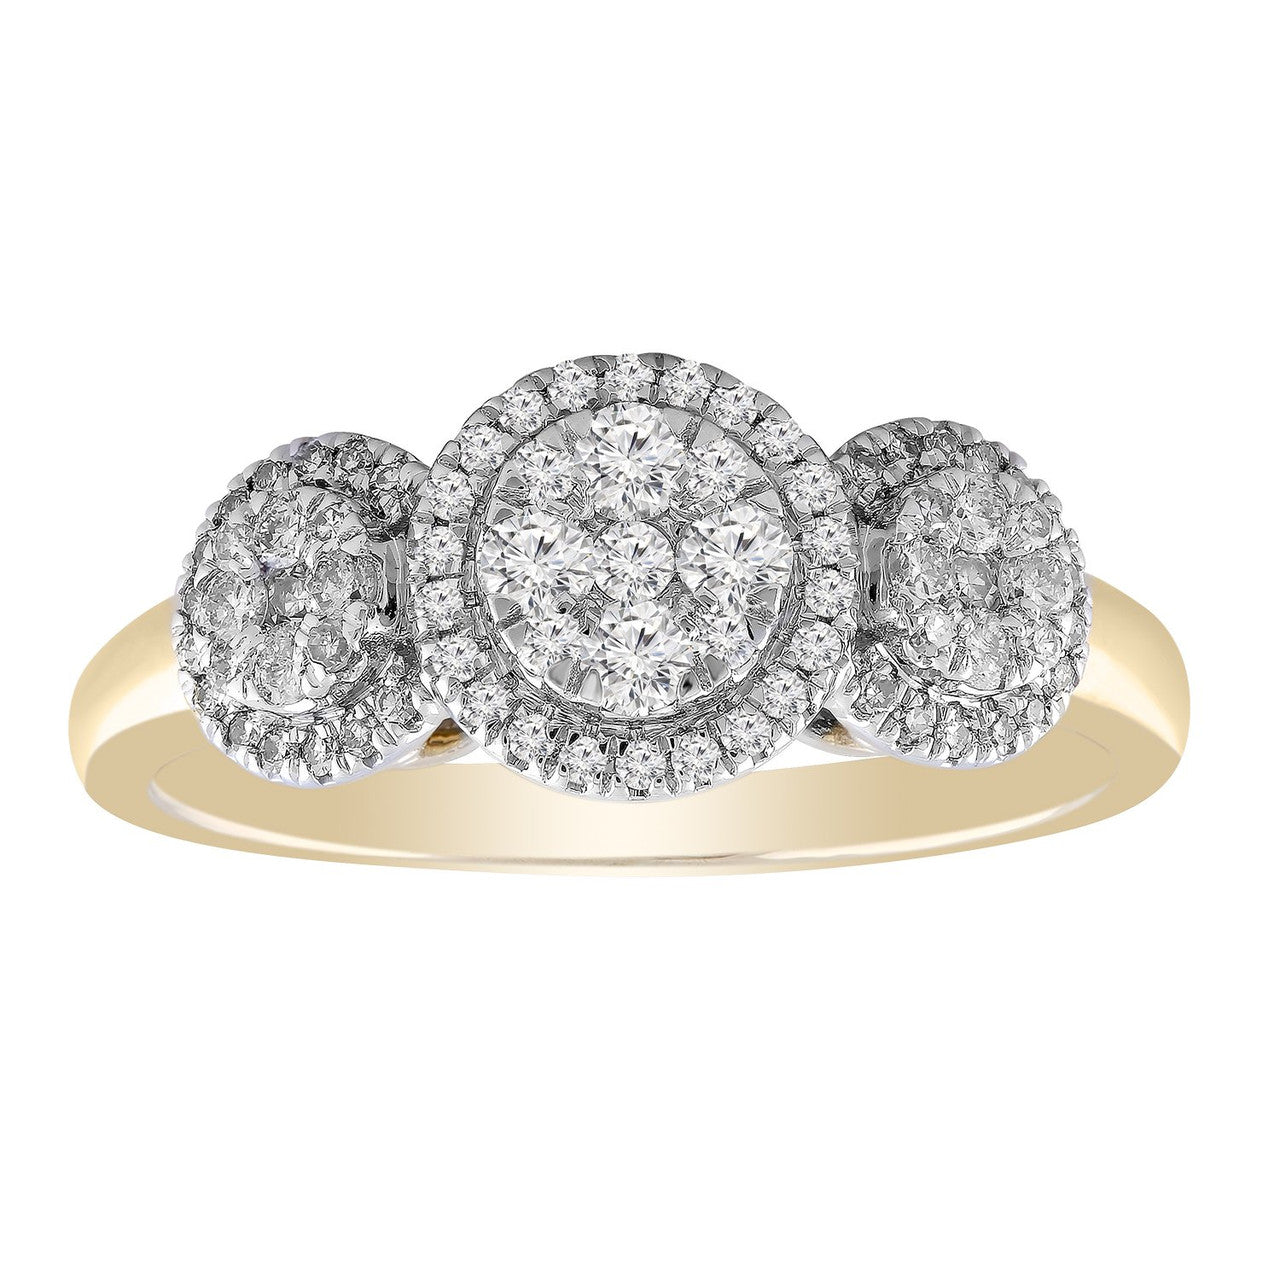 Ice Jewellery Ring with 0.50ct Diamond in 9K Yellow Gold -  R-37213-050-Y | Ice Jewellery Australia